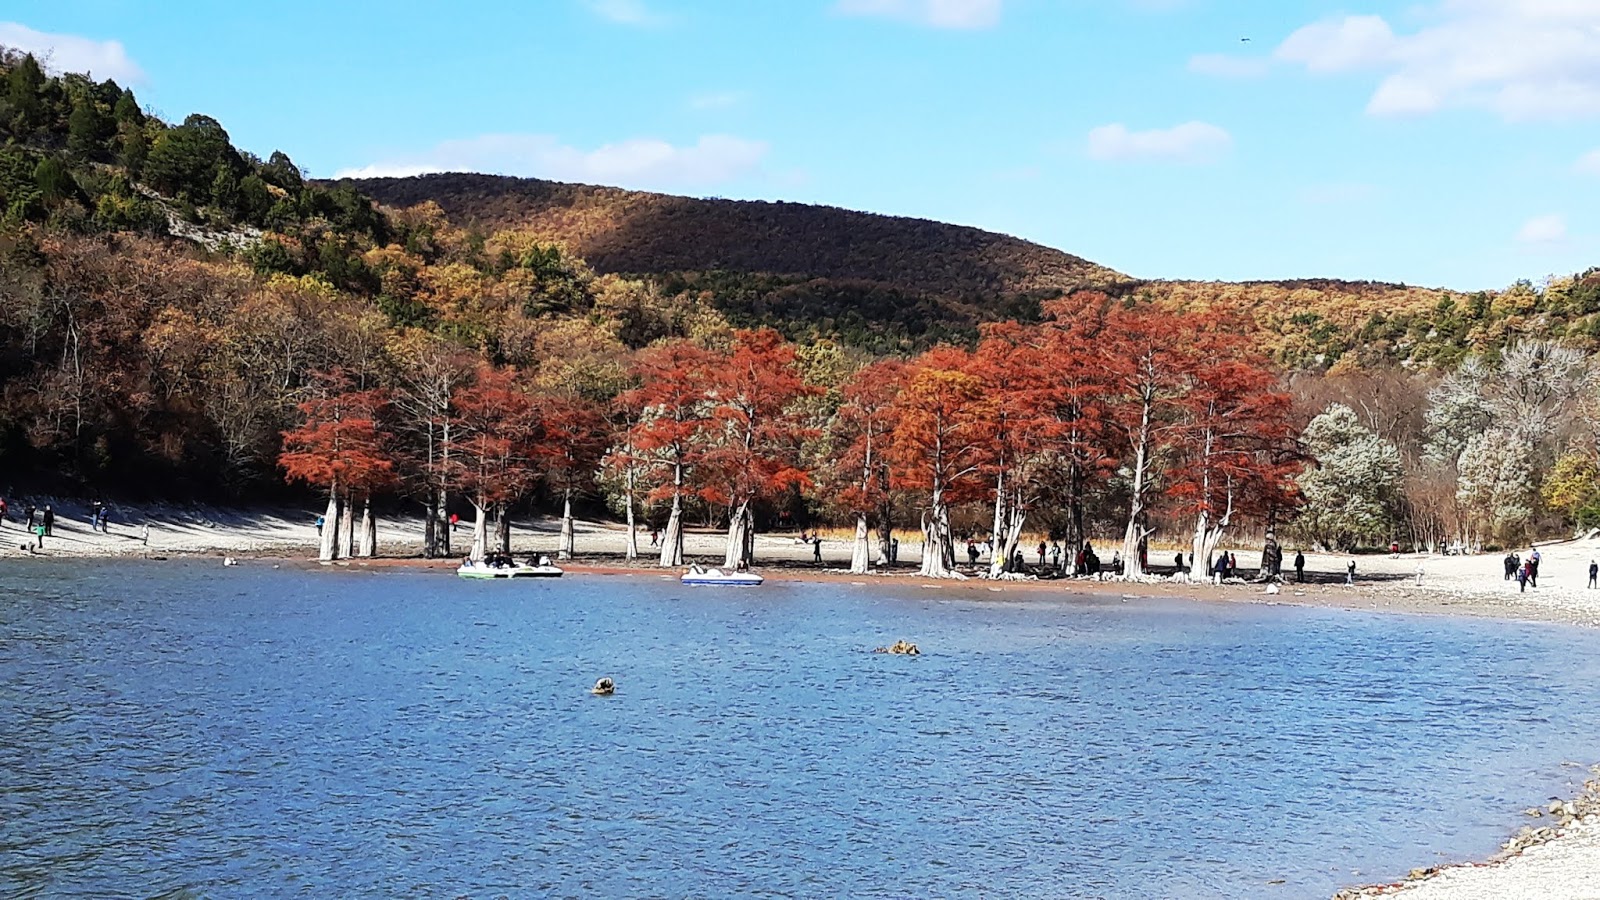 Кипарисовое озеро в анапе осенью фото